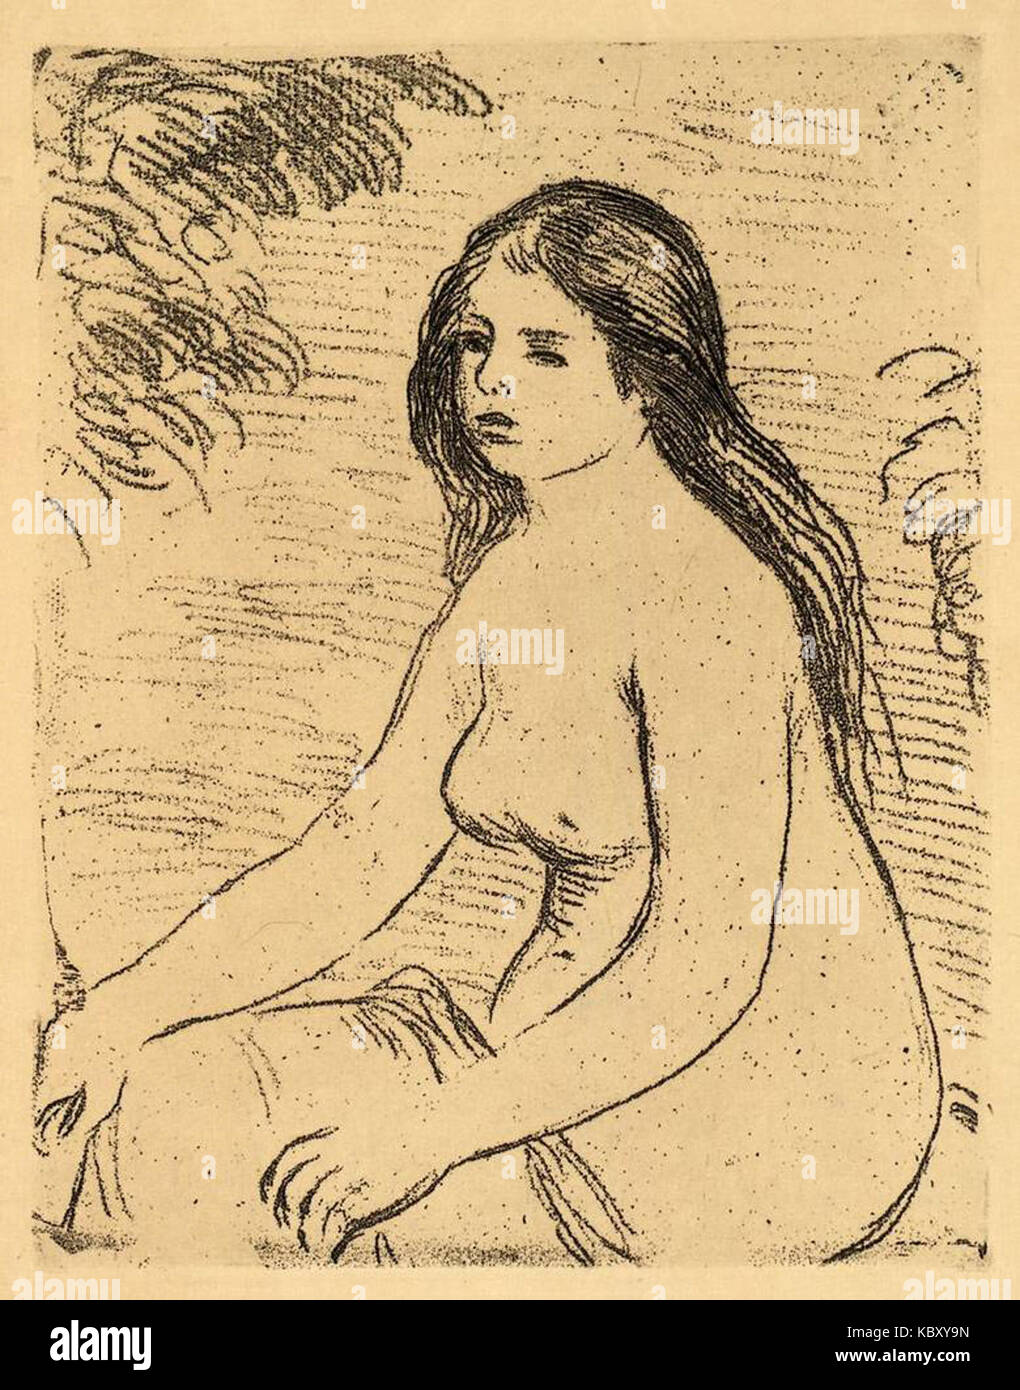 Auguste Renoir Femme nue assise 1906 Stock Photo